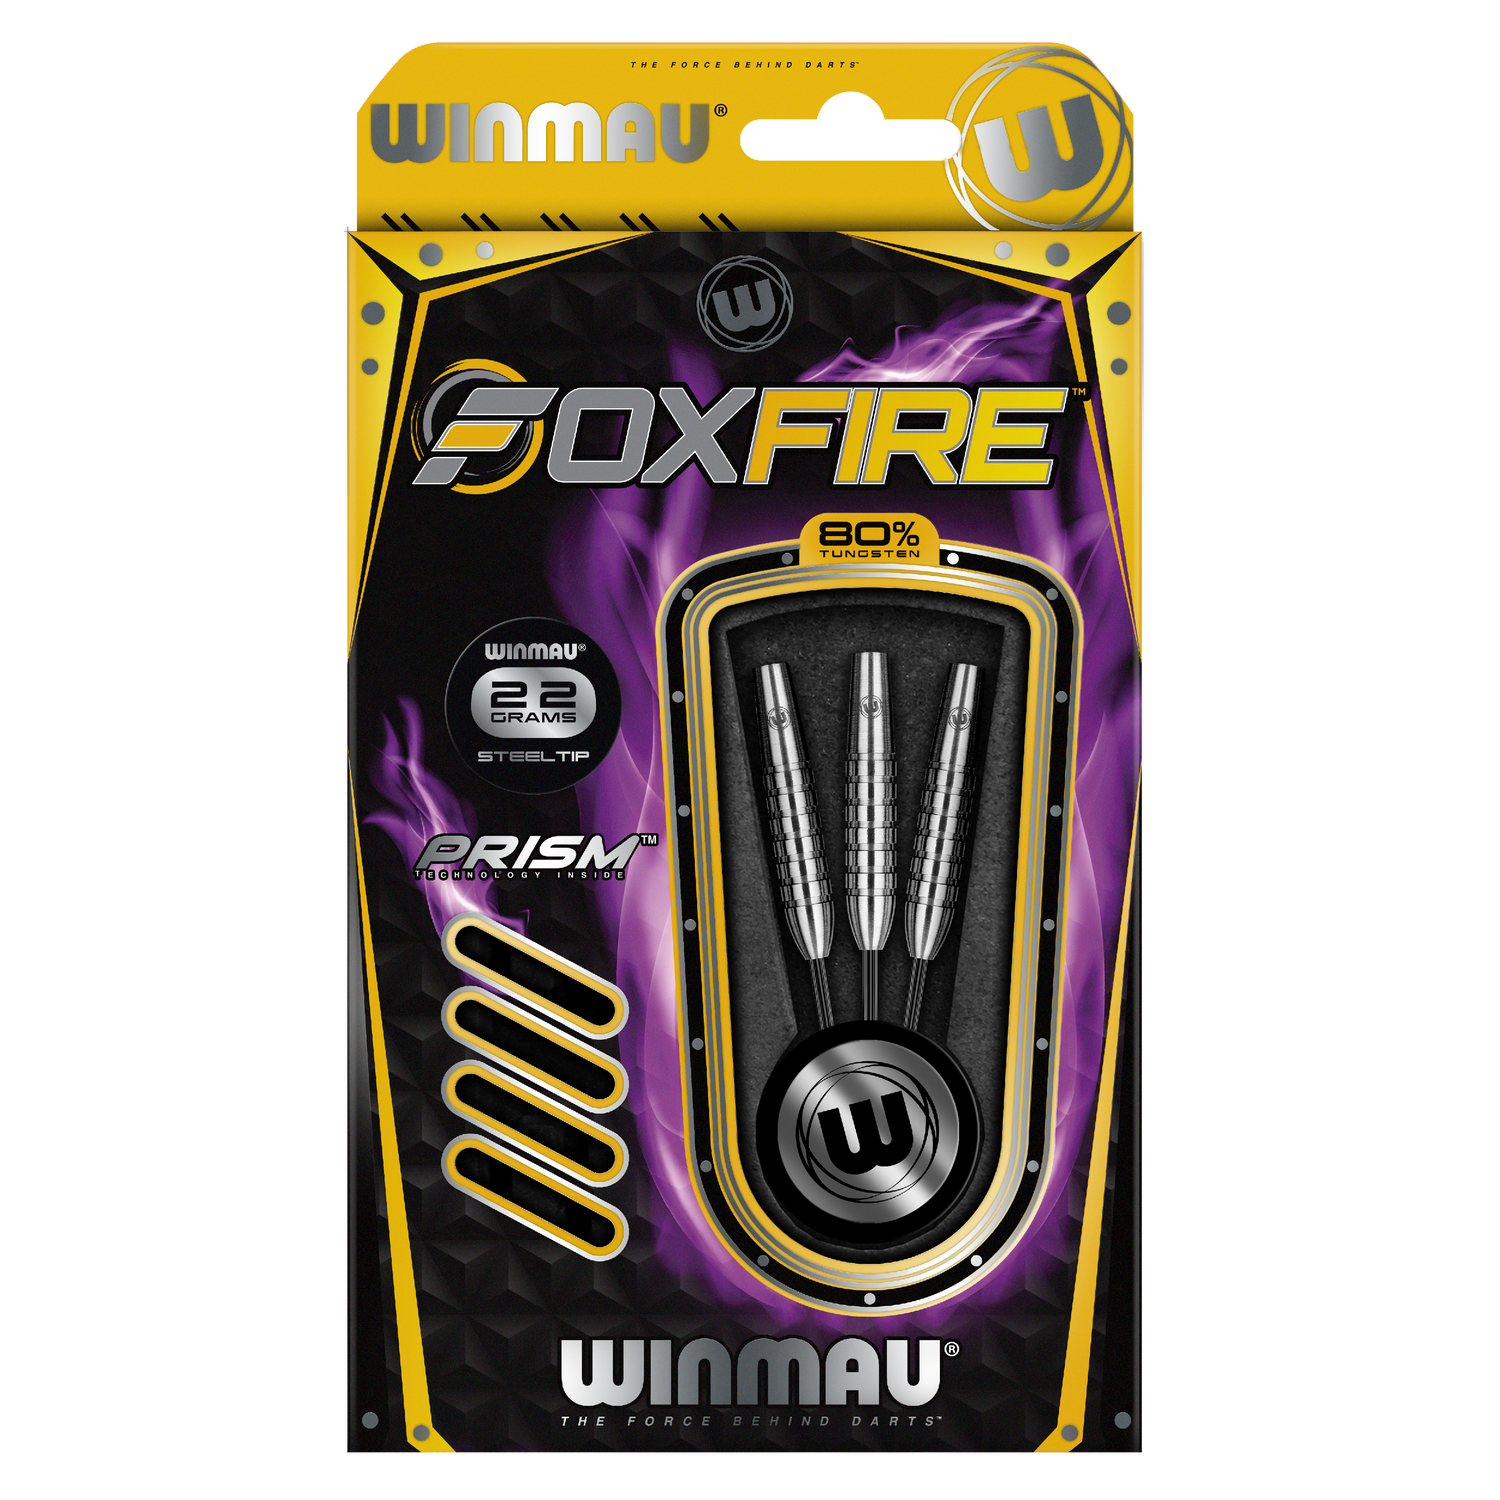 Winmau foxfire 22g 80% Tungsten